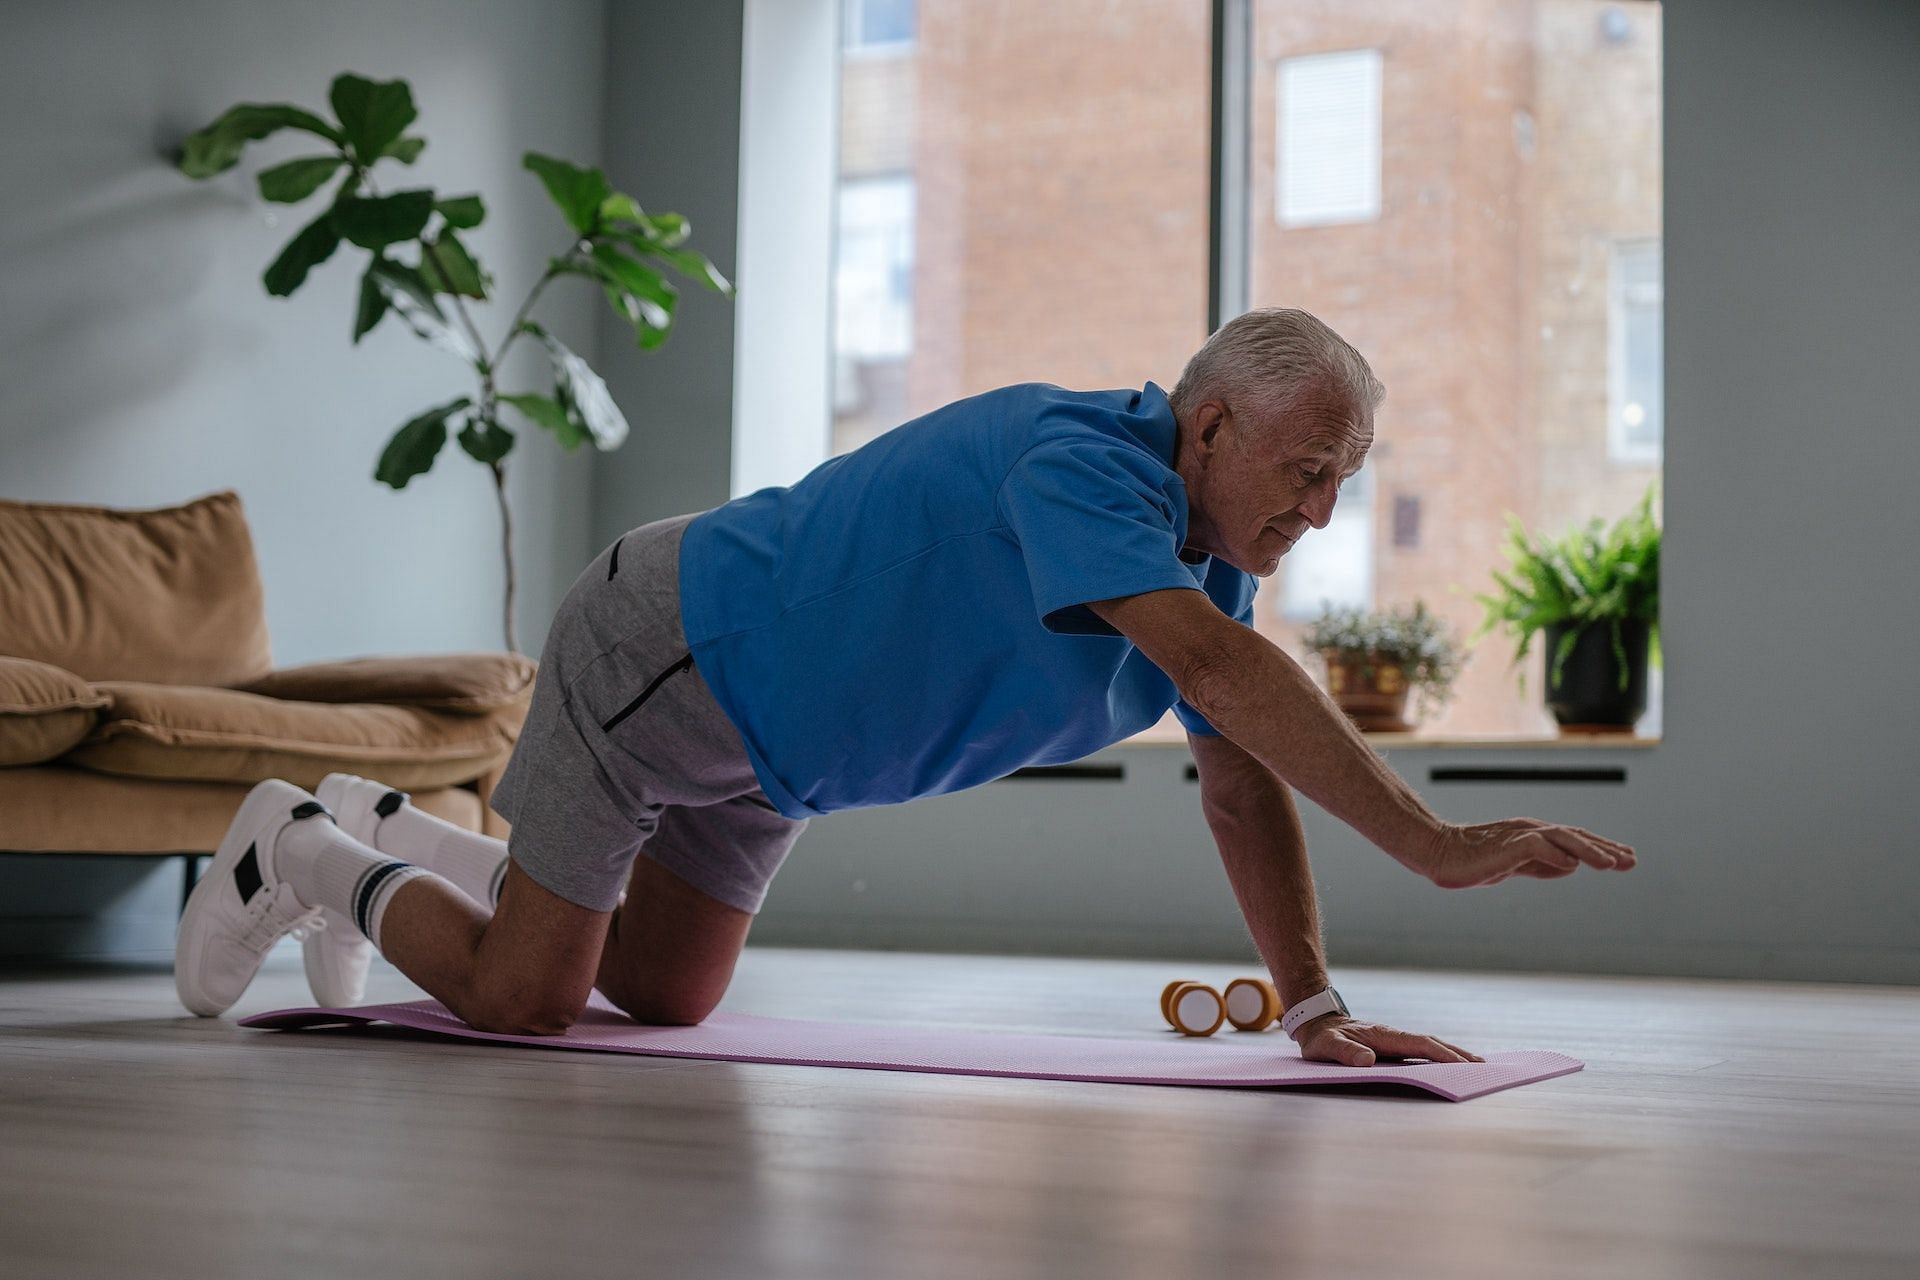 Exercise for seniors is crucial. (Photo via Pexels/SHVETS production)